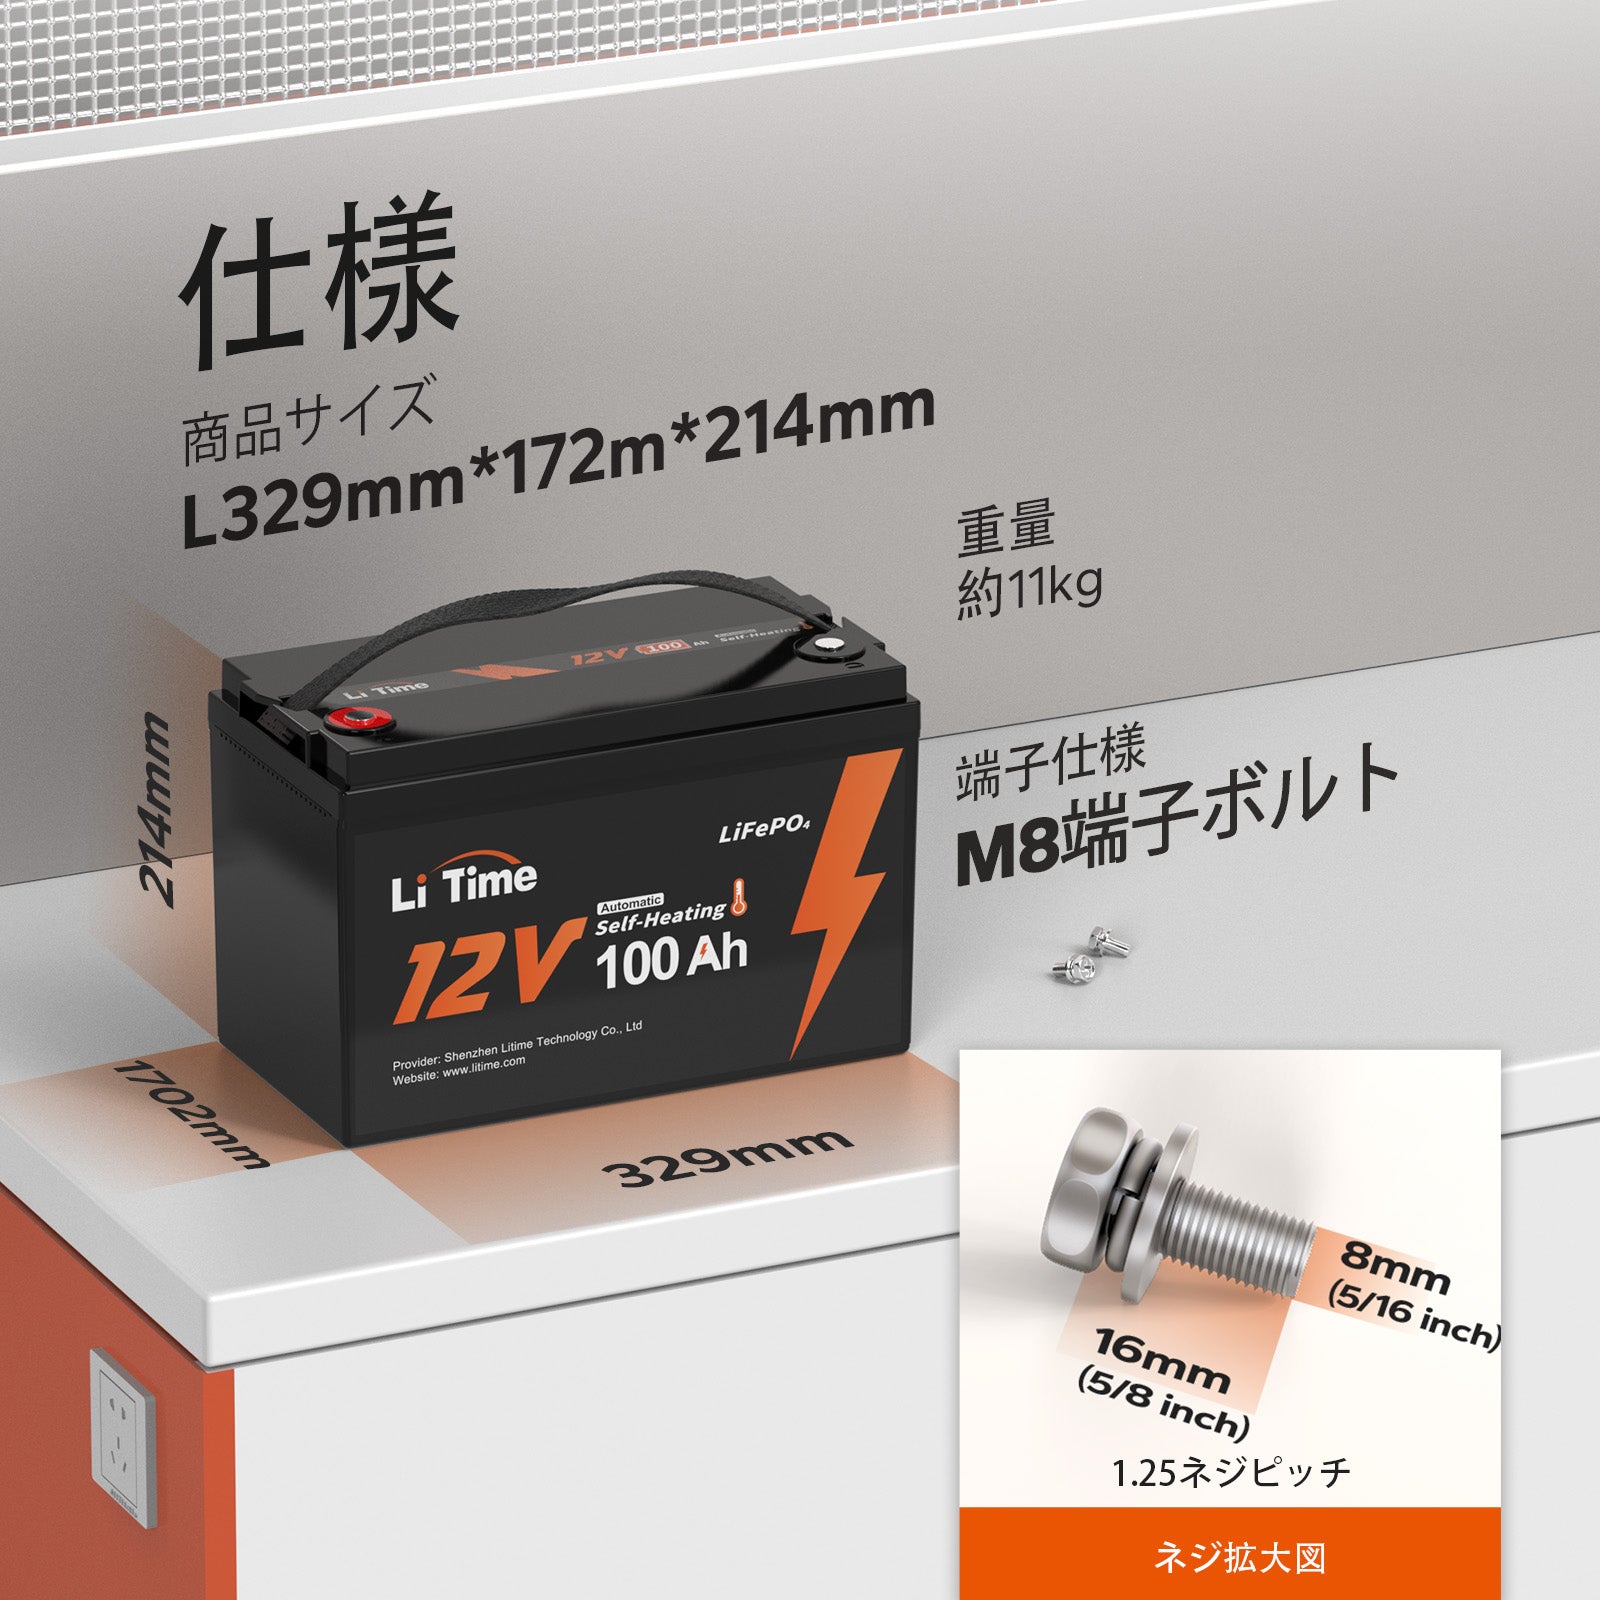 LiTime 12V 100Ah ヒーター付 LiFePO4リチウムバッテリー jp-amperetime